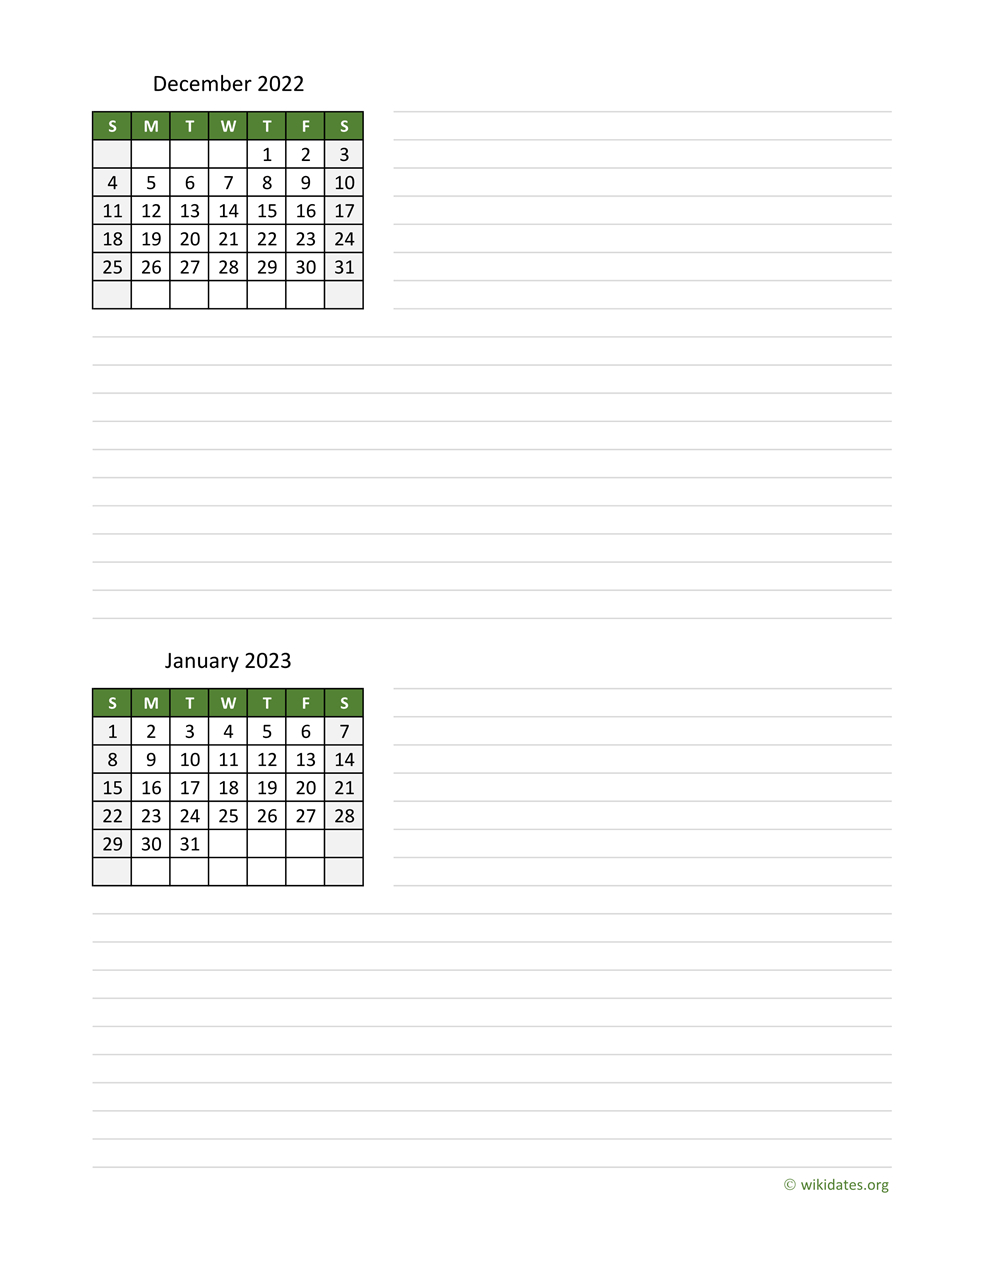 December 2022 And January 2023 Calendar | Wikidates  December 2022 And January 2023 Calendar